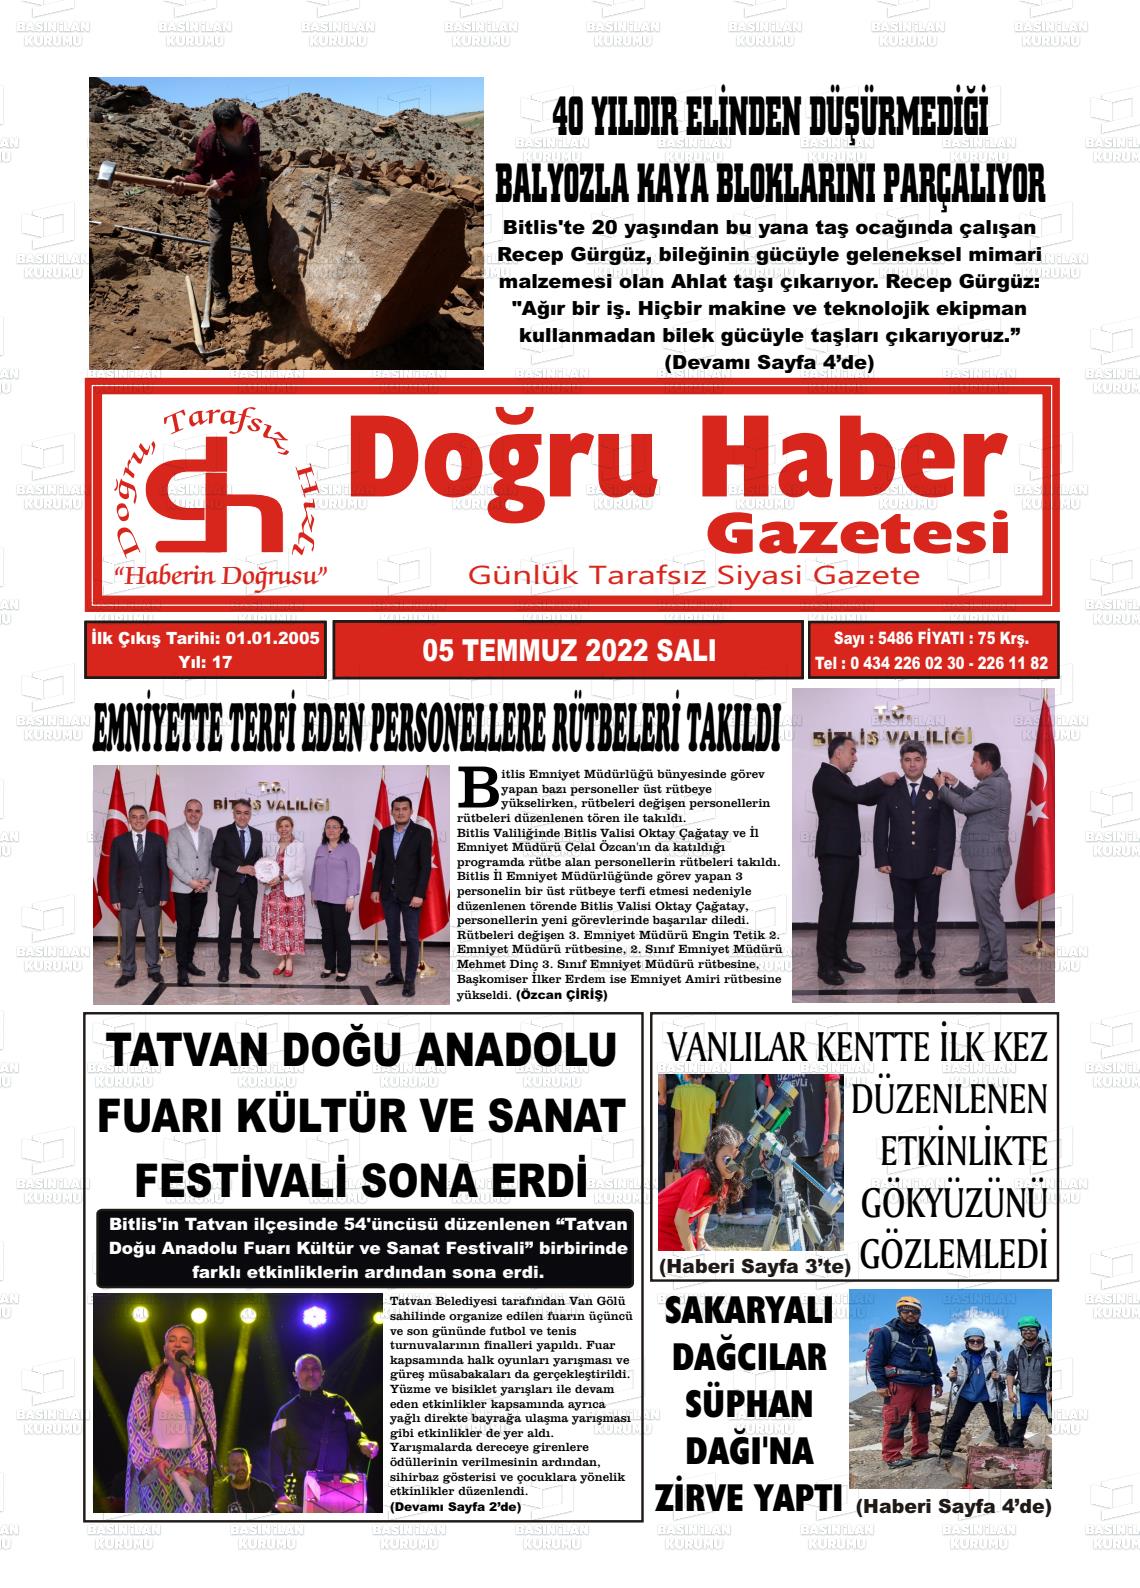 05 Temmuz 2022 Doğru Haber Gazete Manşeti